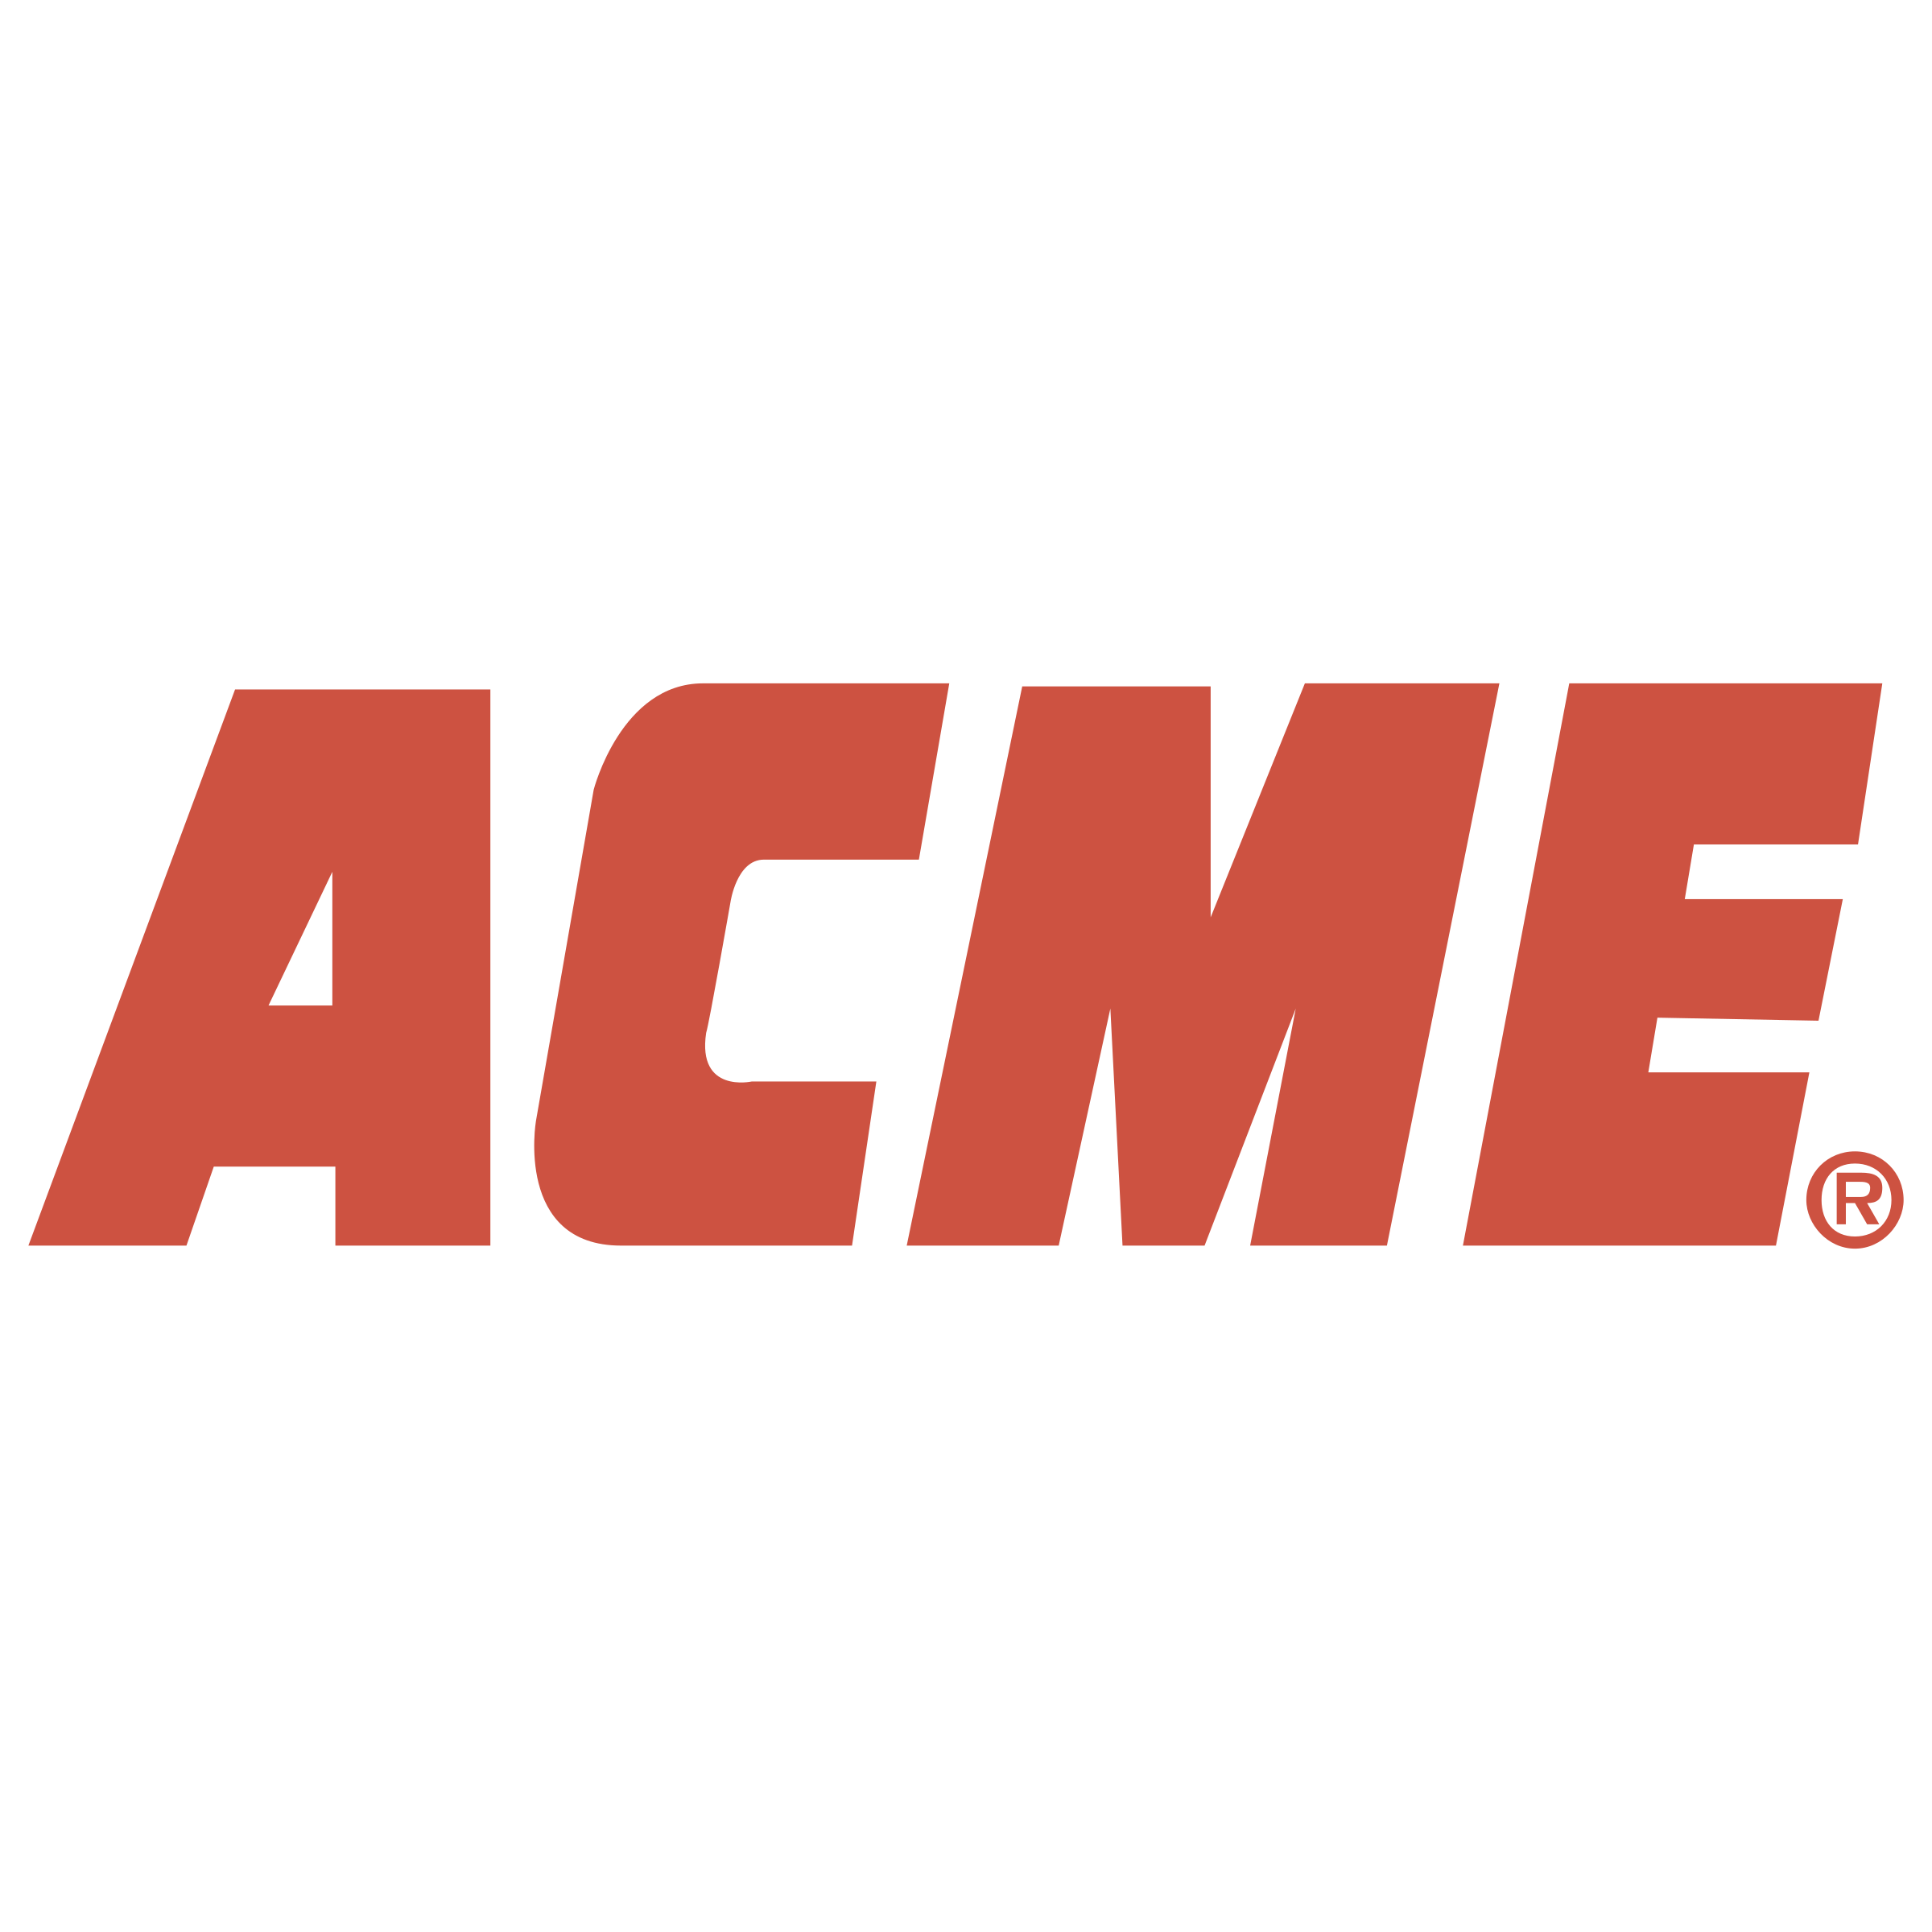 Acme Logo - Acme Logo PNG Transparent & SVG Vector - Freebie Supply